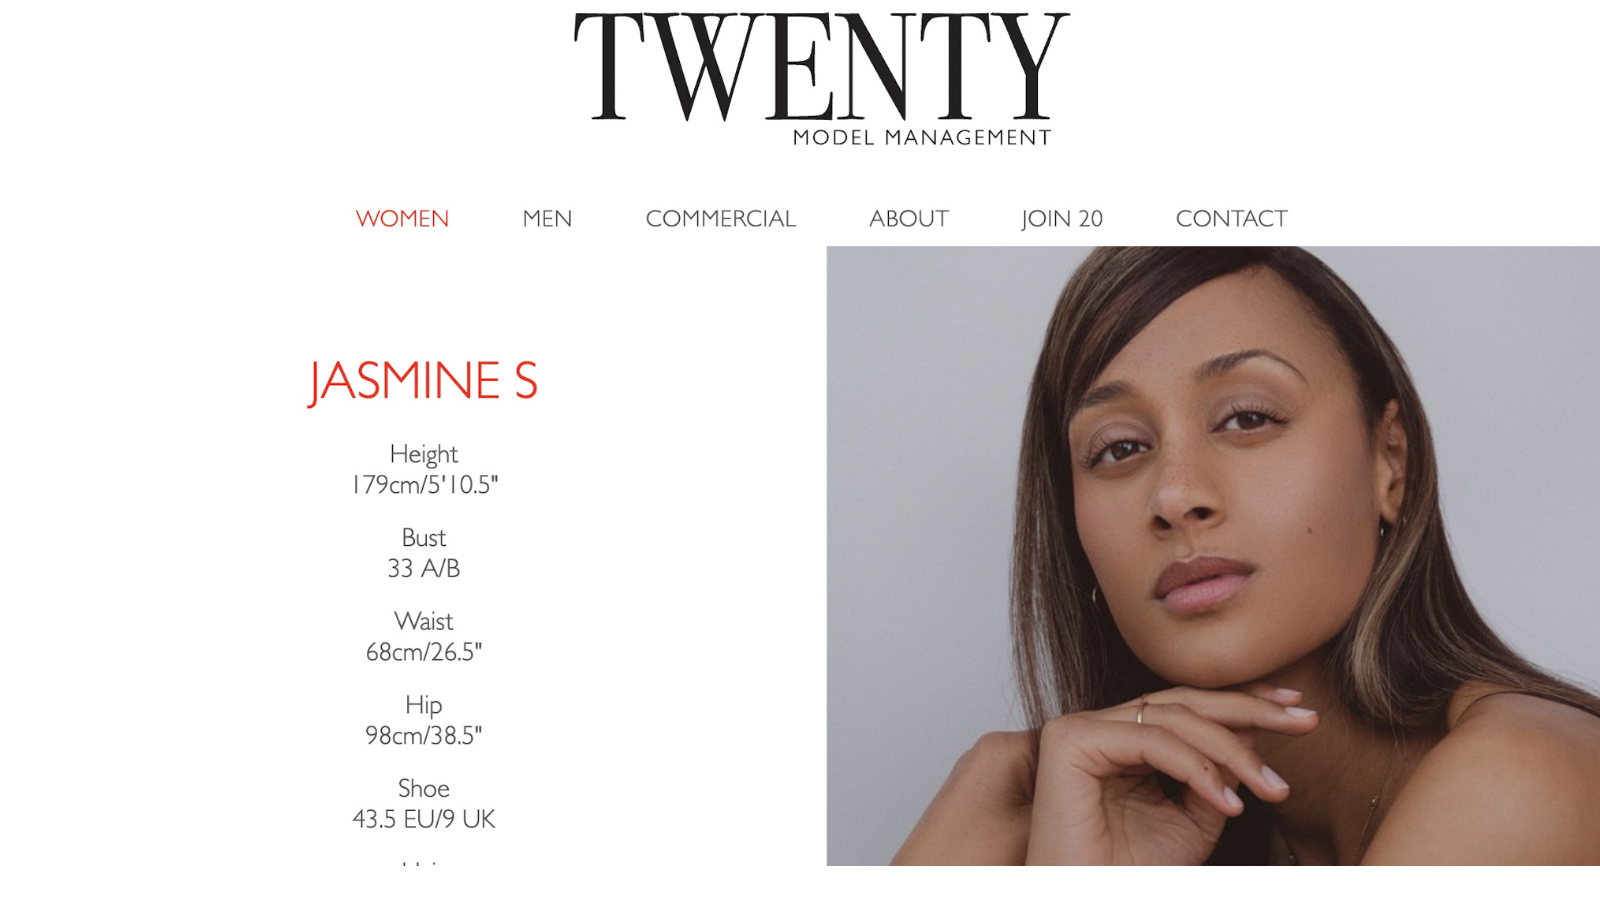 tweenty-model-management-jasmine-sidibe